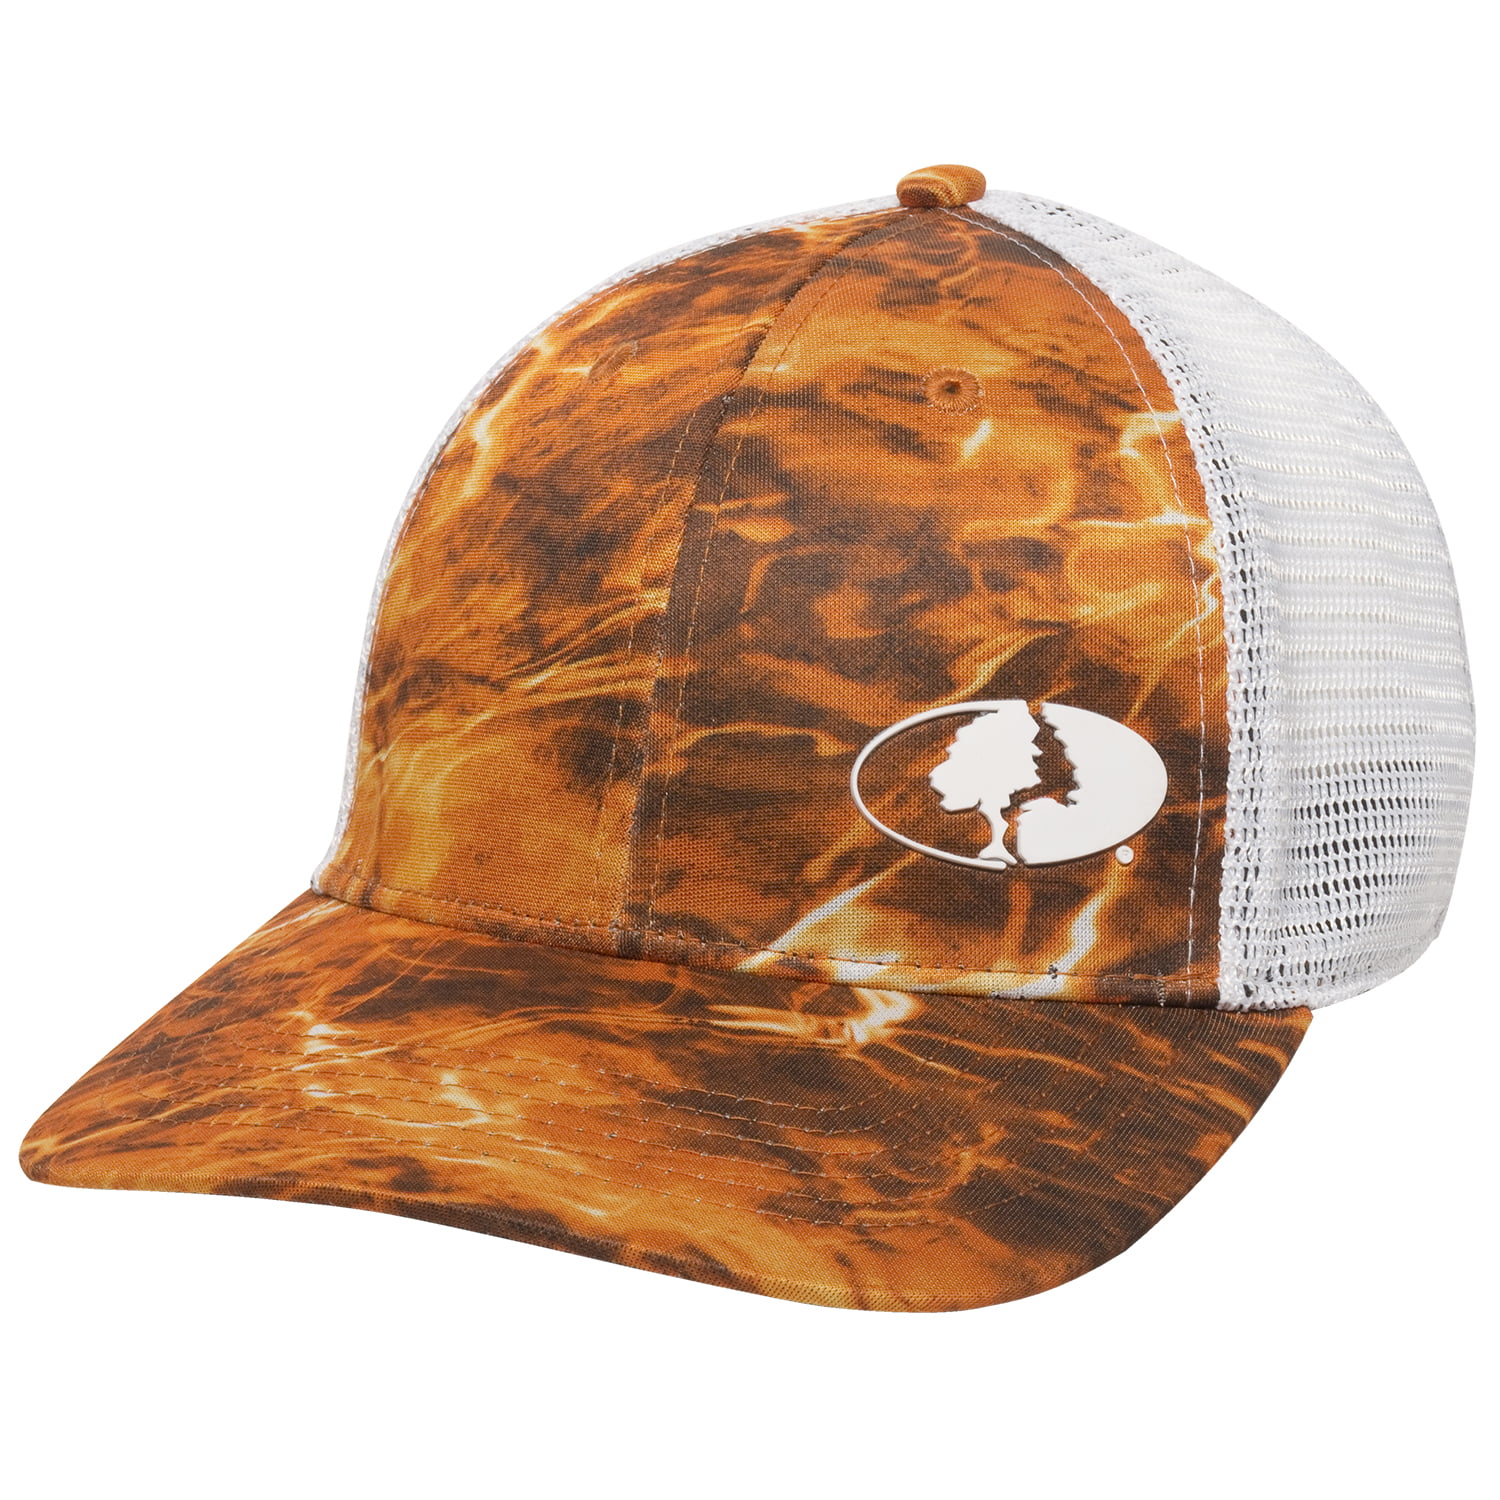 Mossy Oak Men's Stretch Fit Fishing Hat with Mesh Back, Large/XL, Elements  Sunset Orange Camo